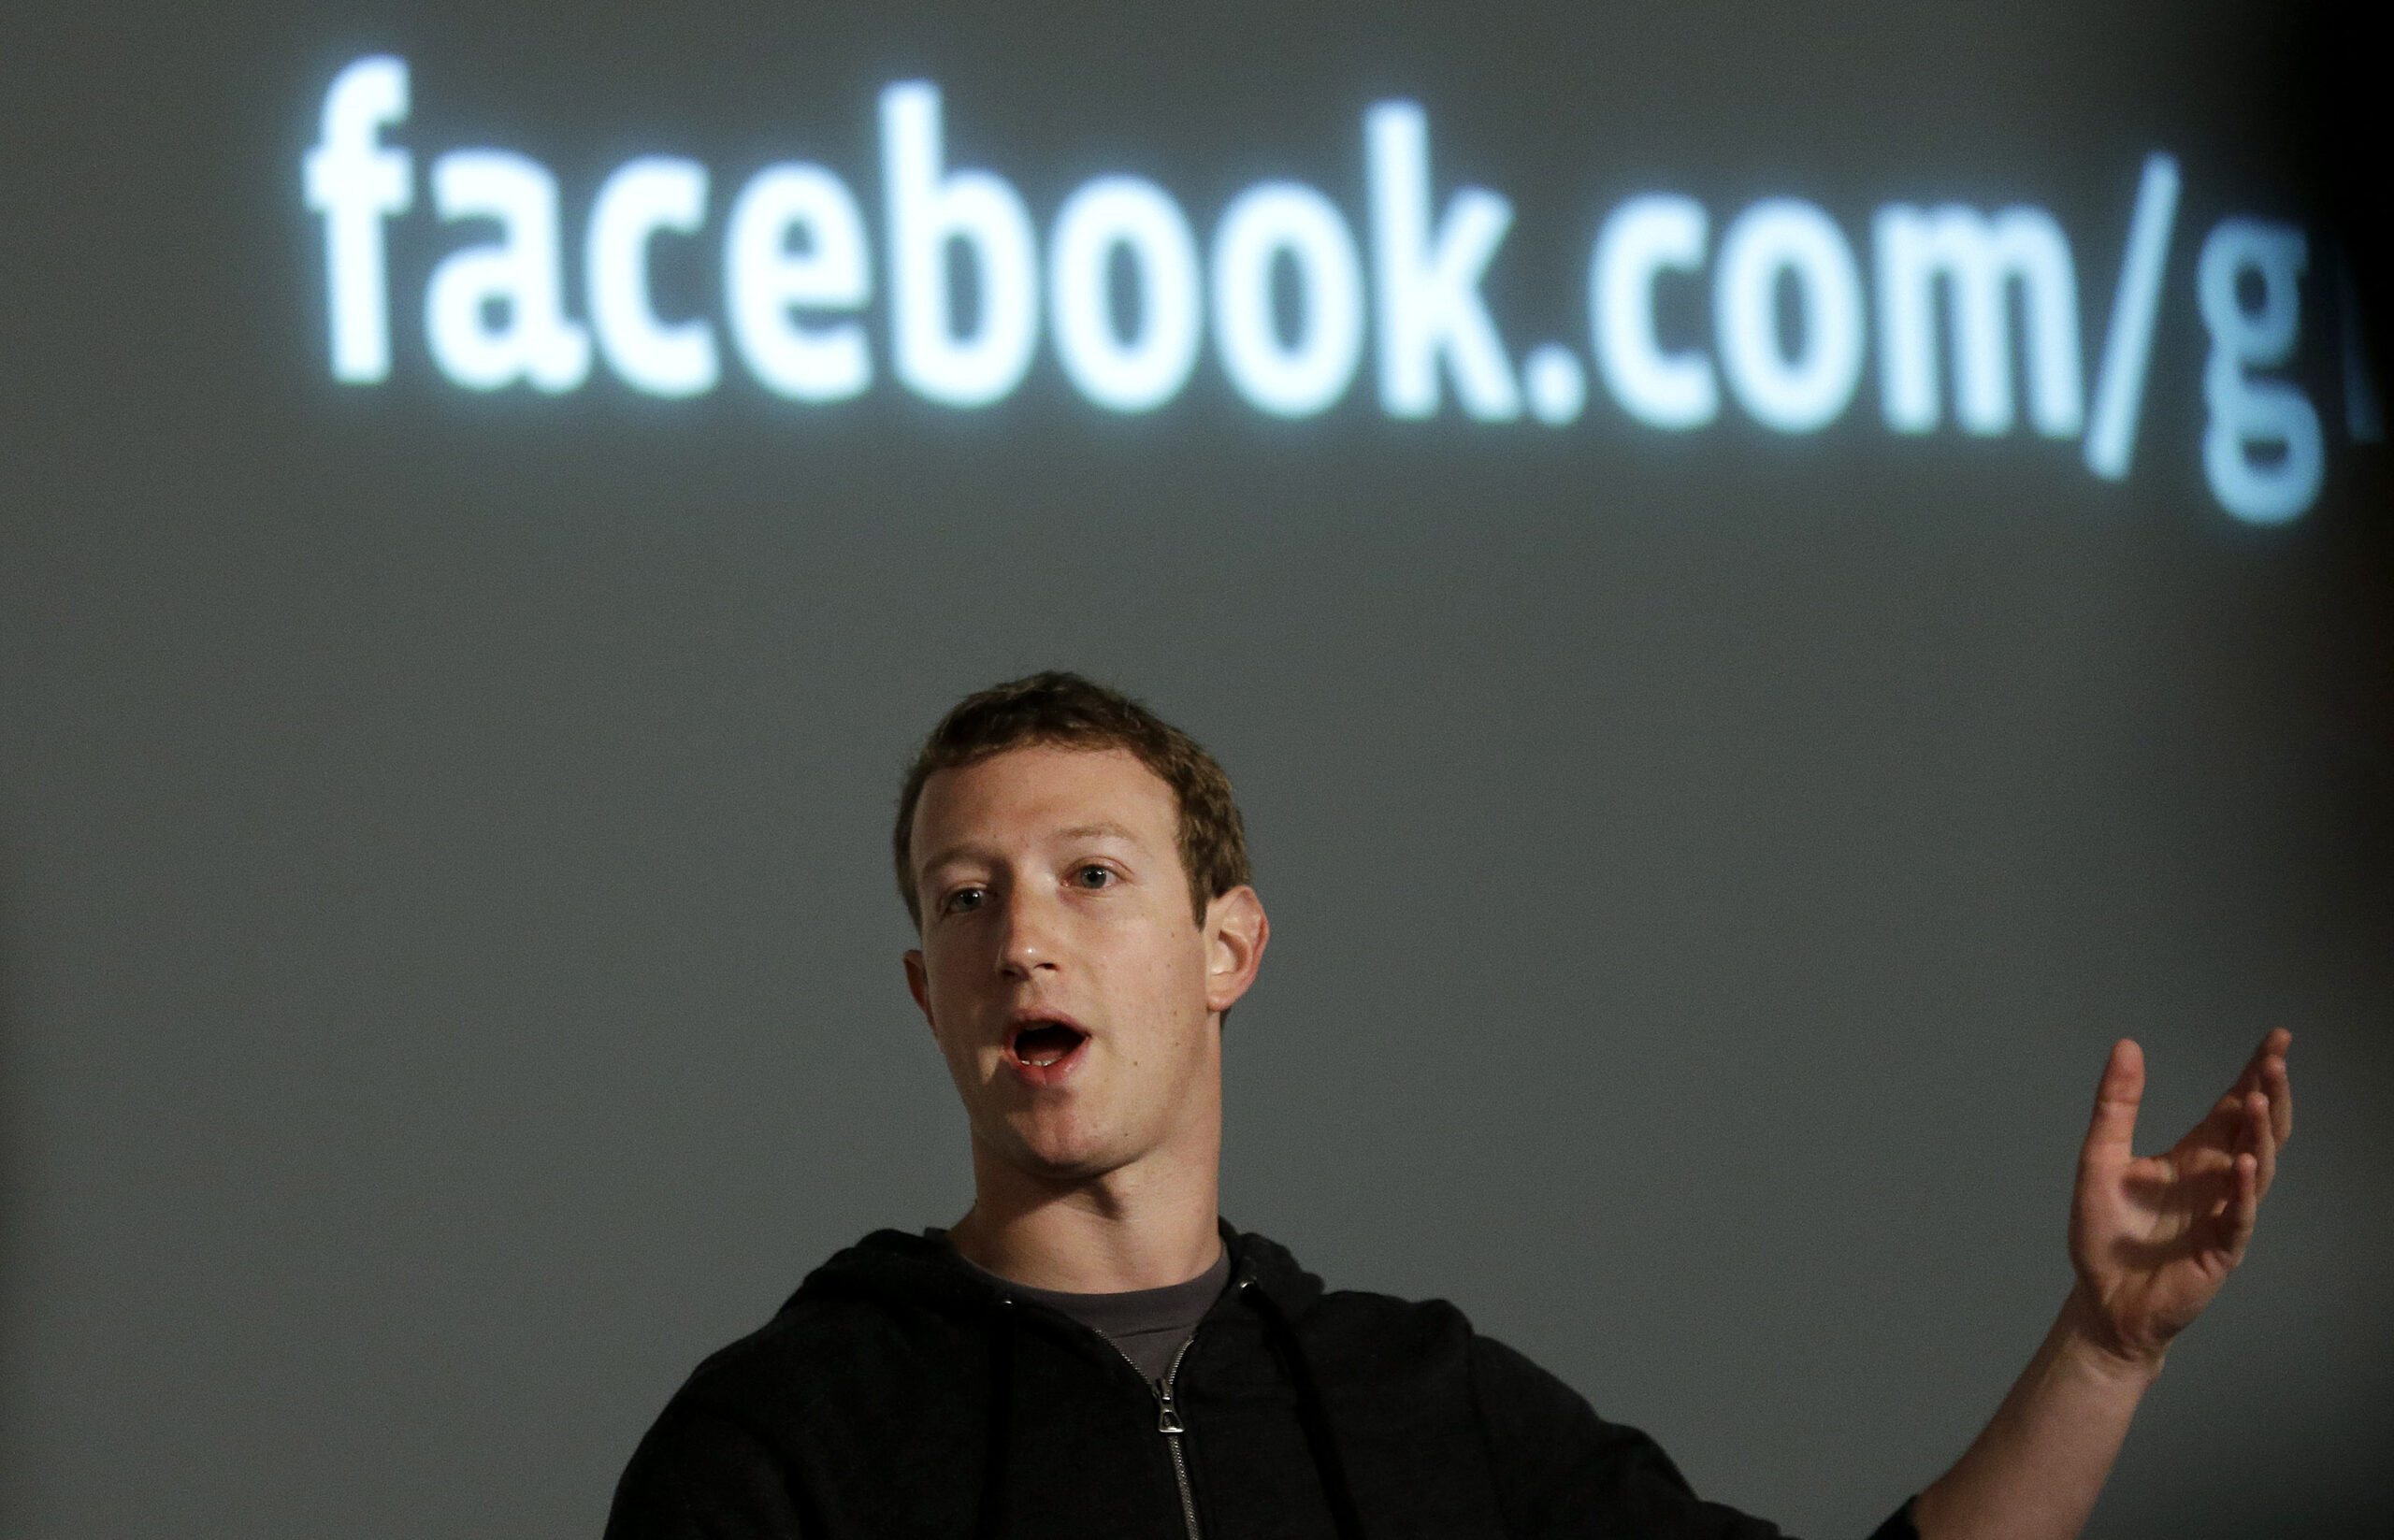 Facebook strikes a blow against free speech - Washington Examiner